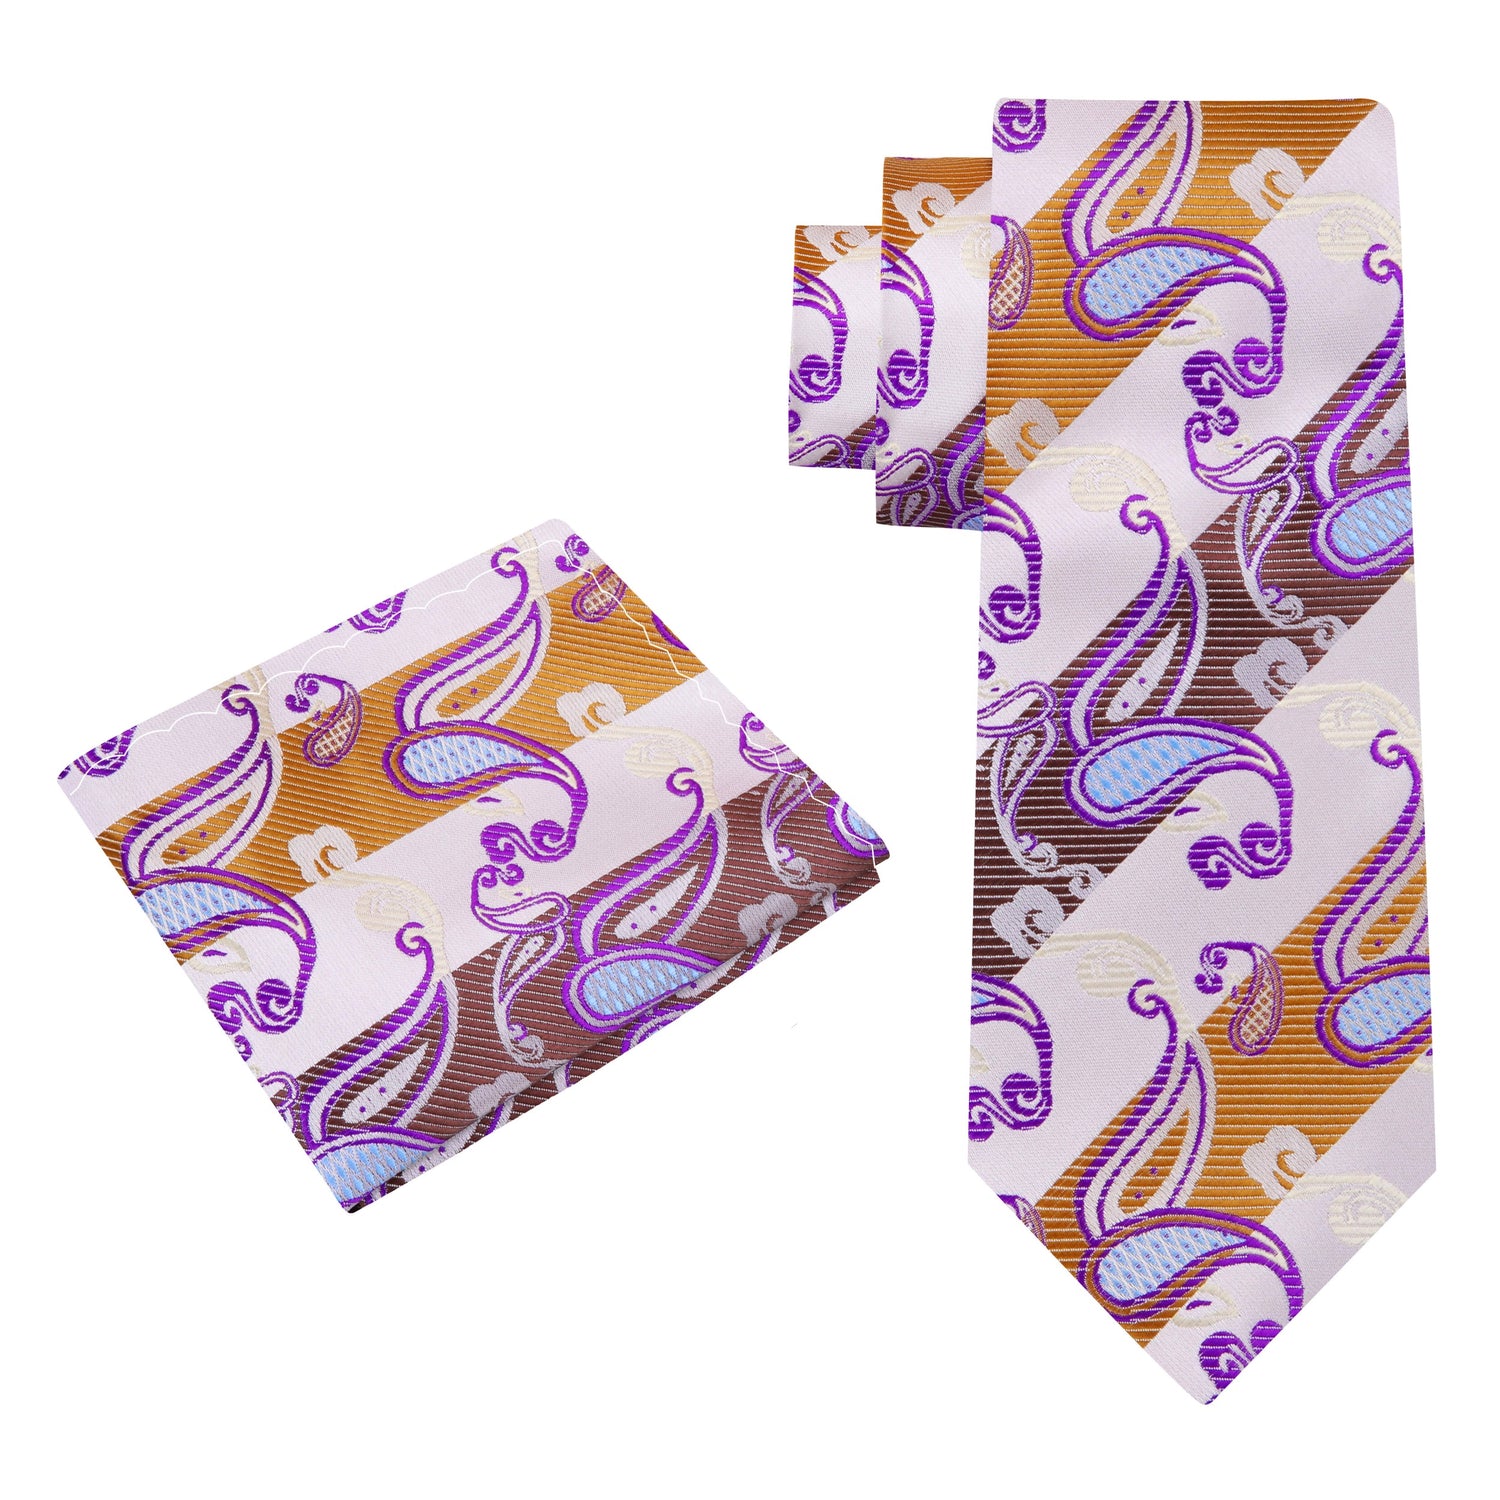 Alt View: An Ivory, Light Blue, Purple Paisley Pattern Silk Necktie, Matching Pocket Square